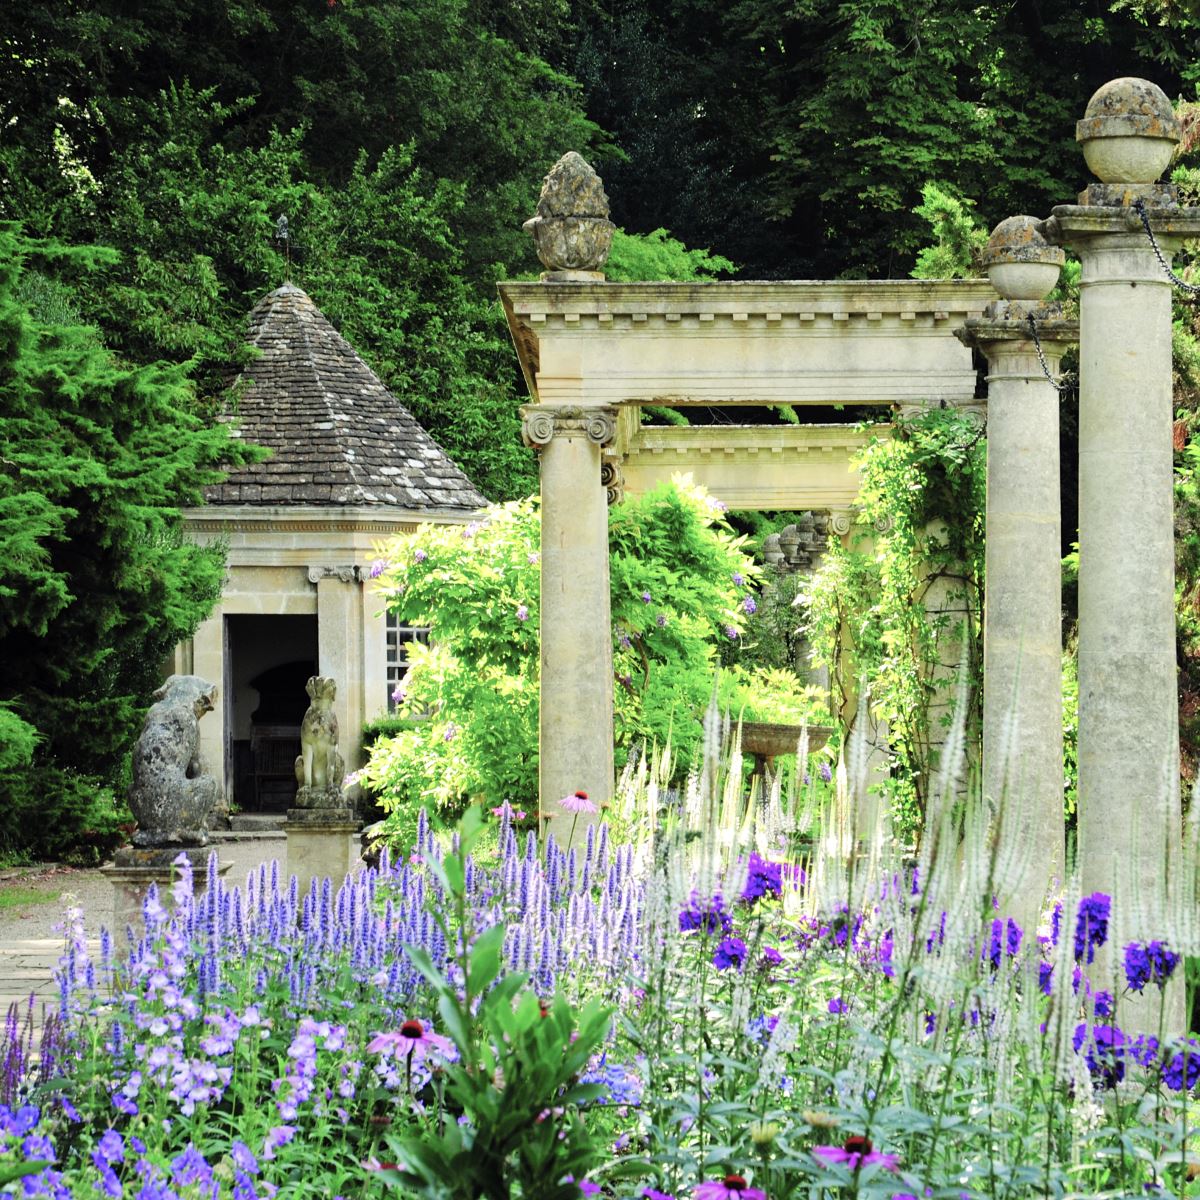 Iford Manor: The Peto Garden